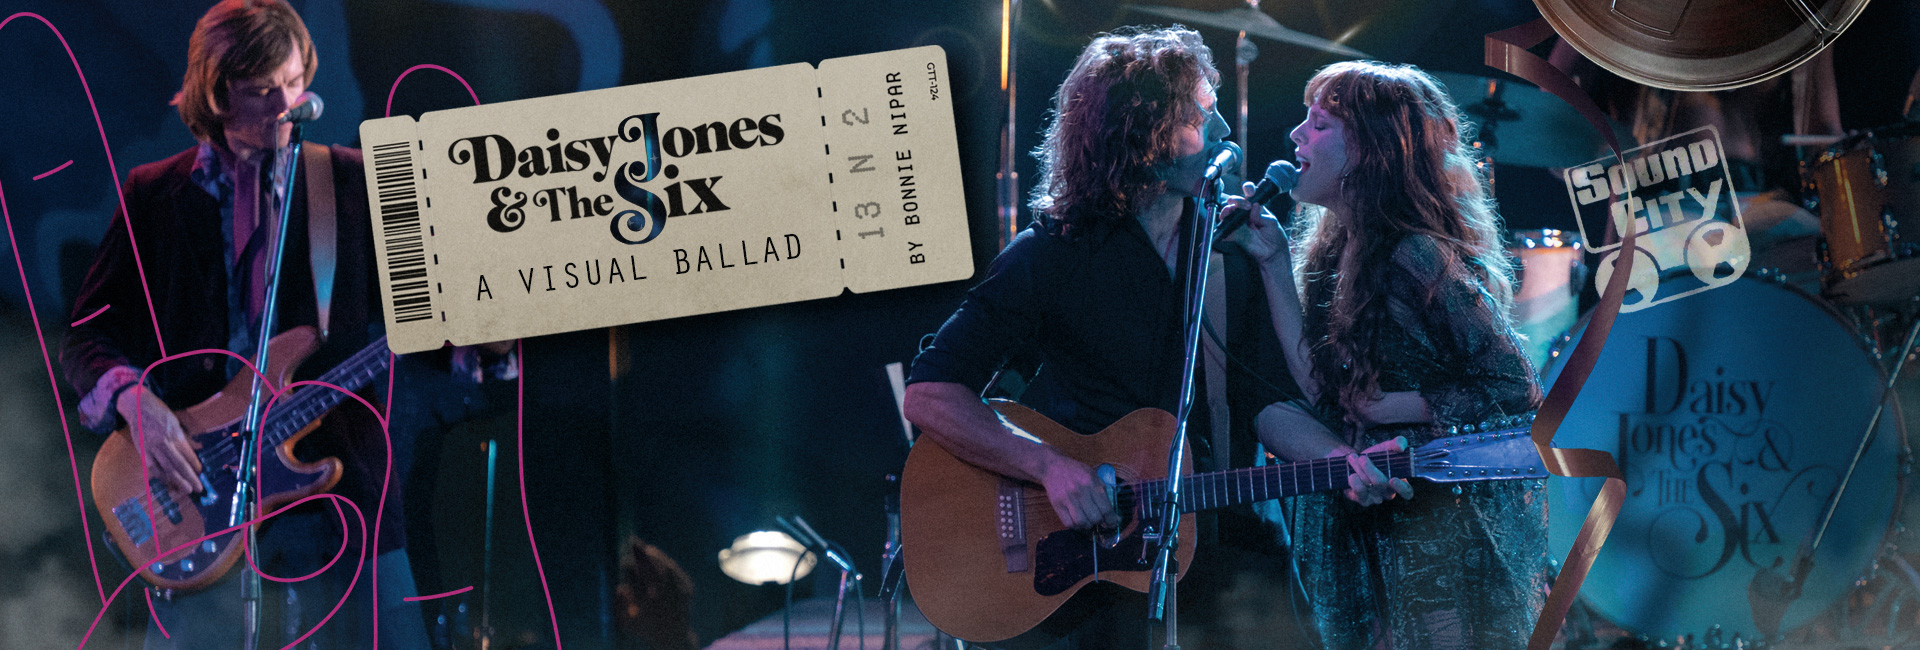 Daisy Jones & The Six – A Visual Ballad